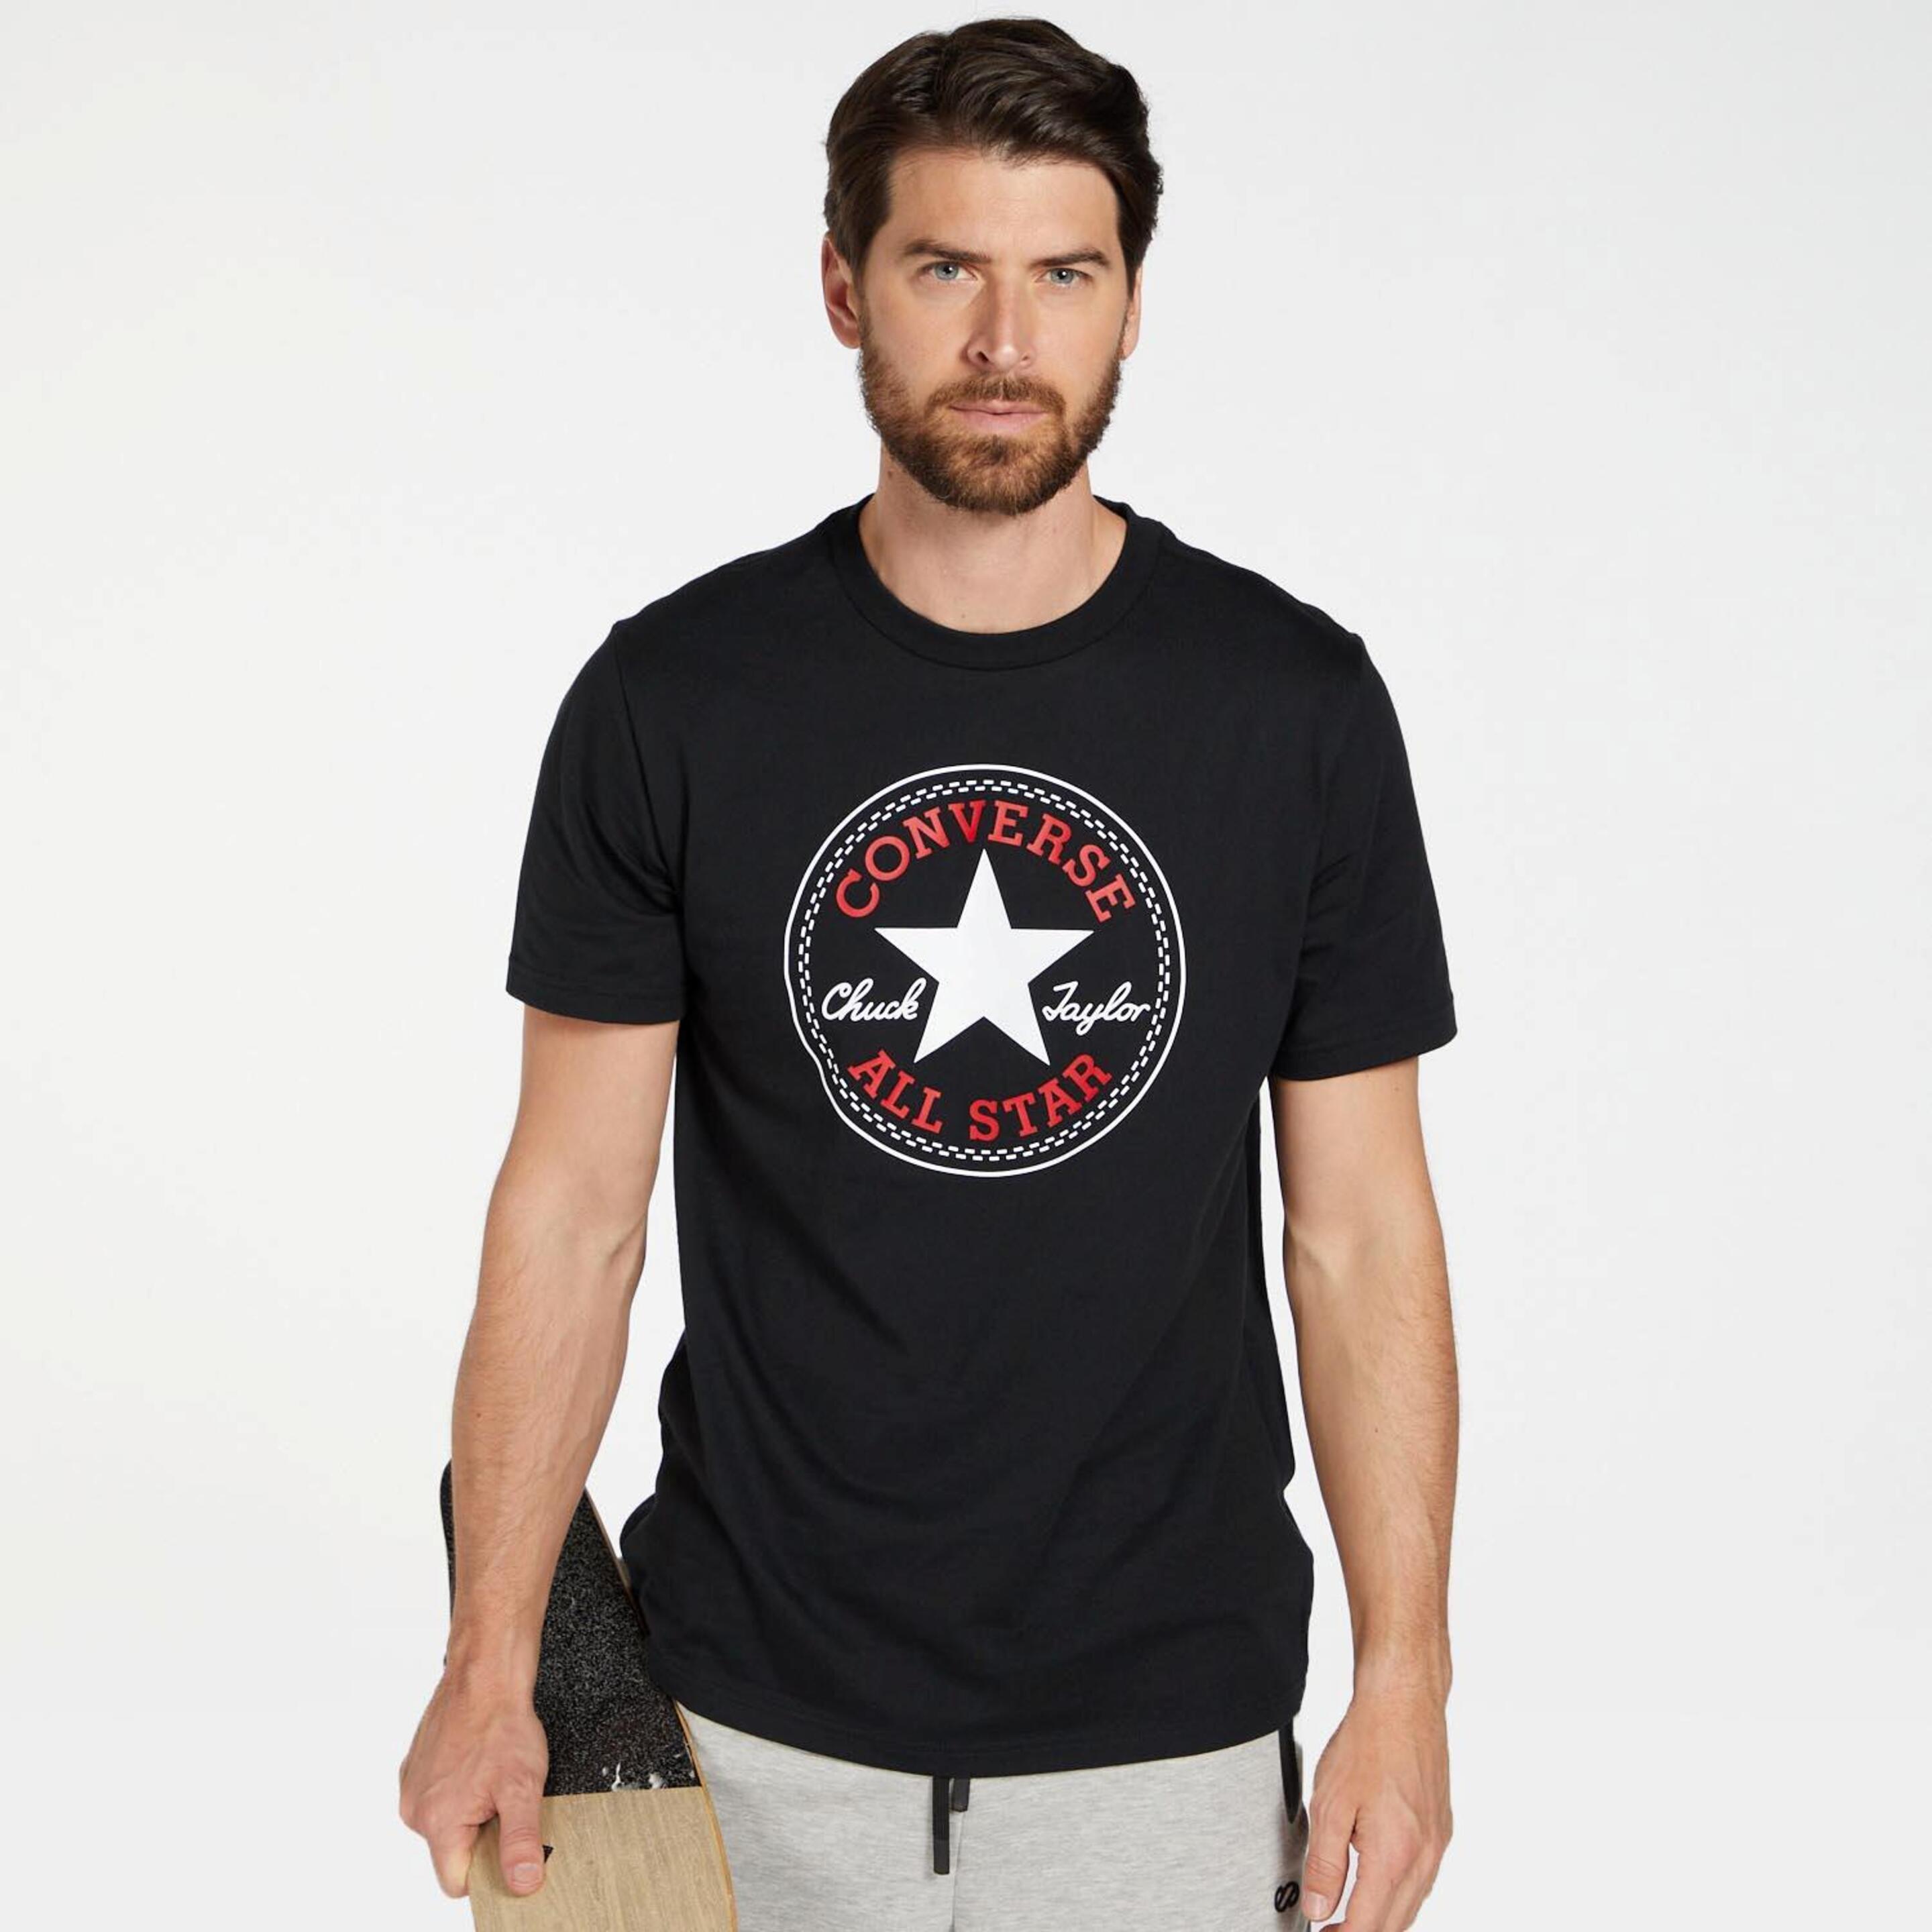 Converse All Star - negro - Camiseta Hombre